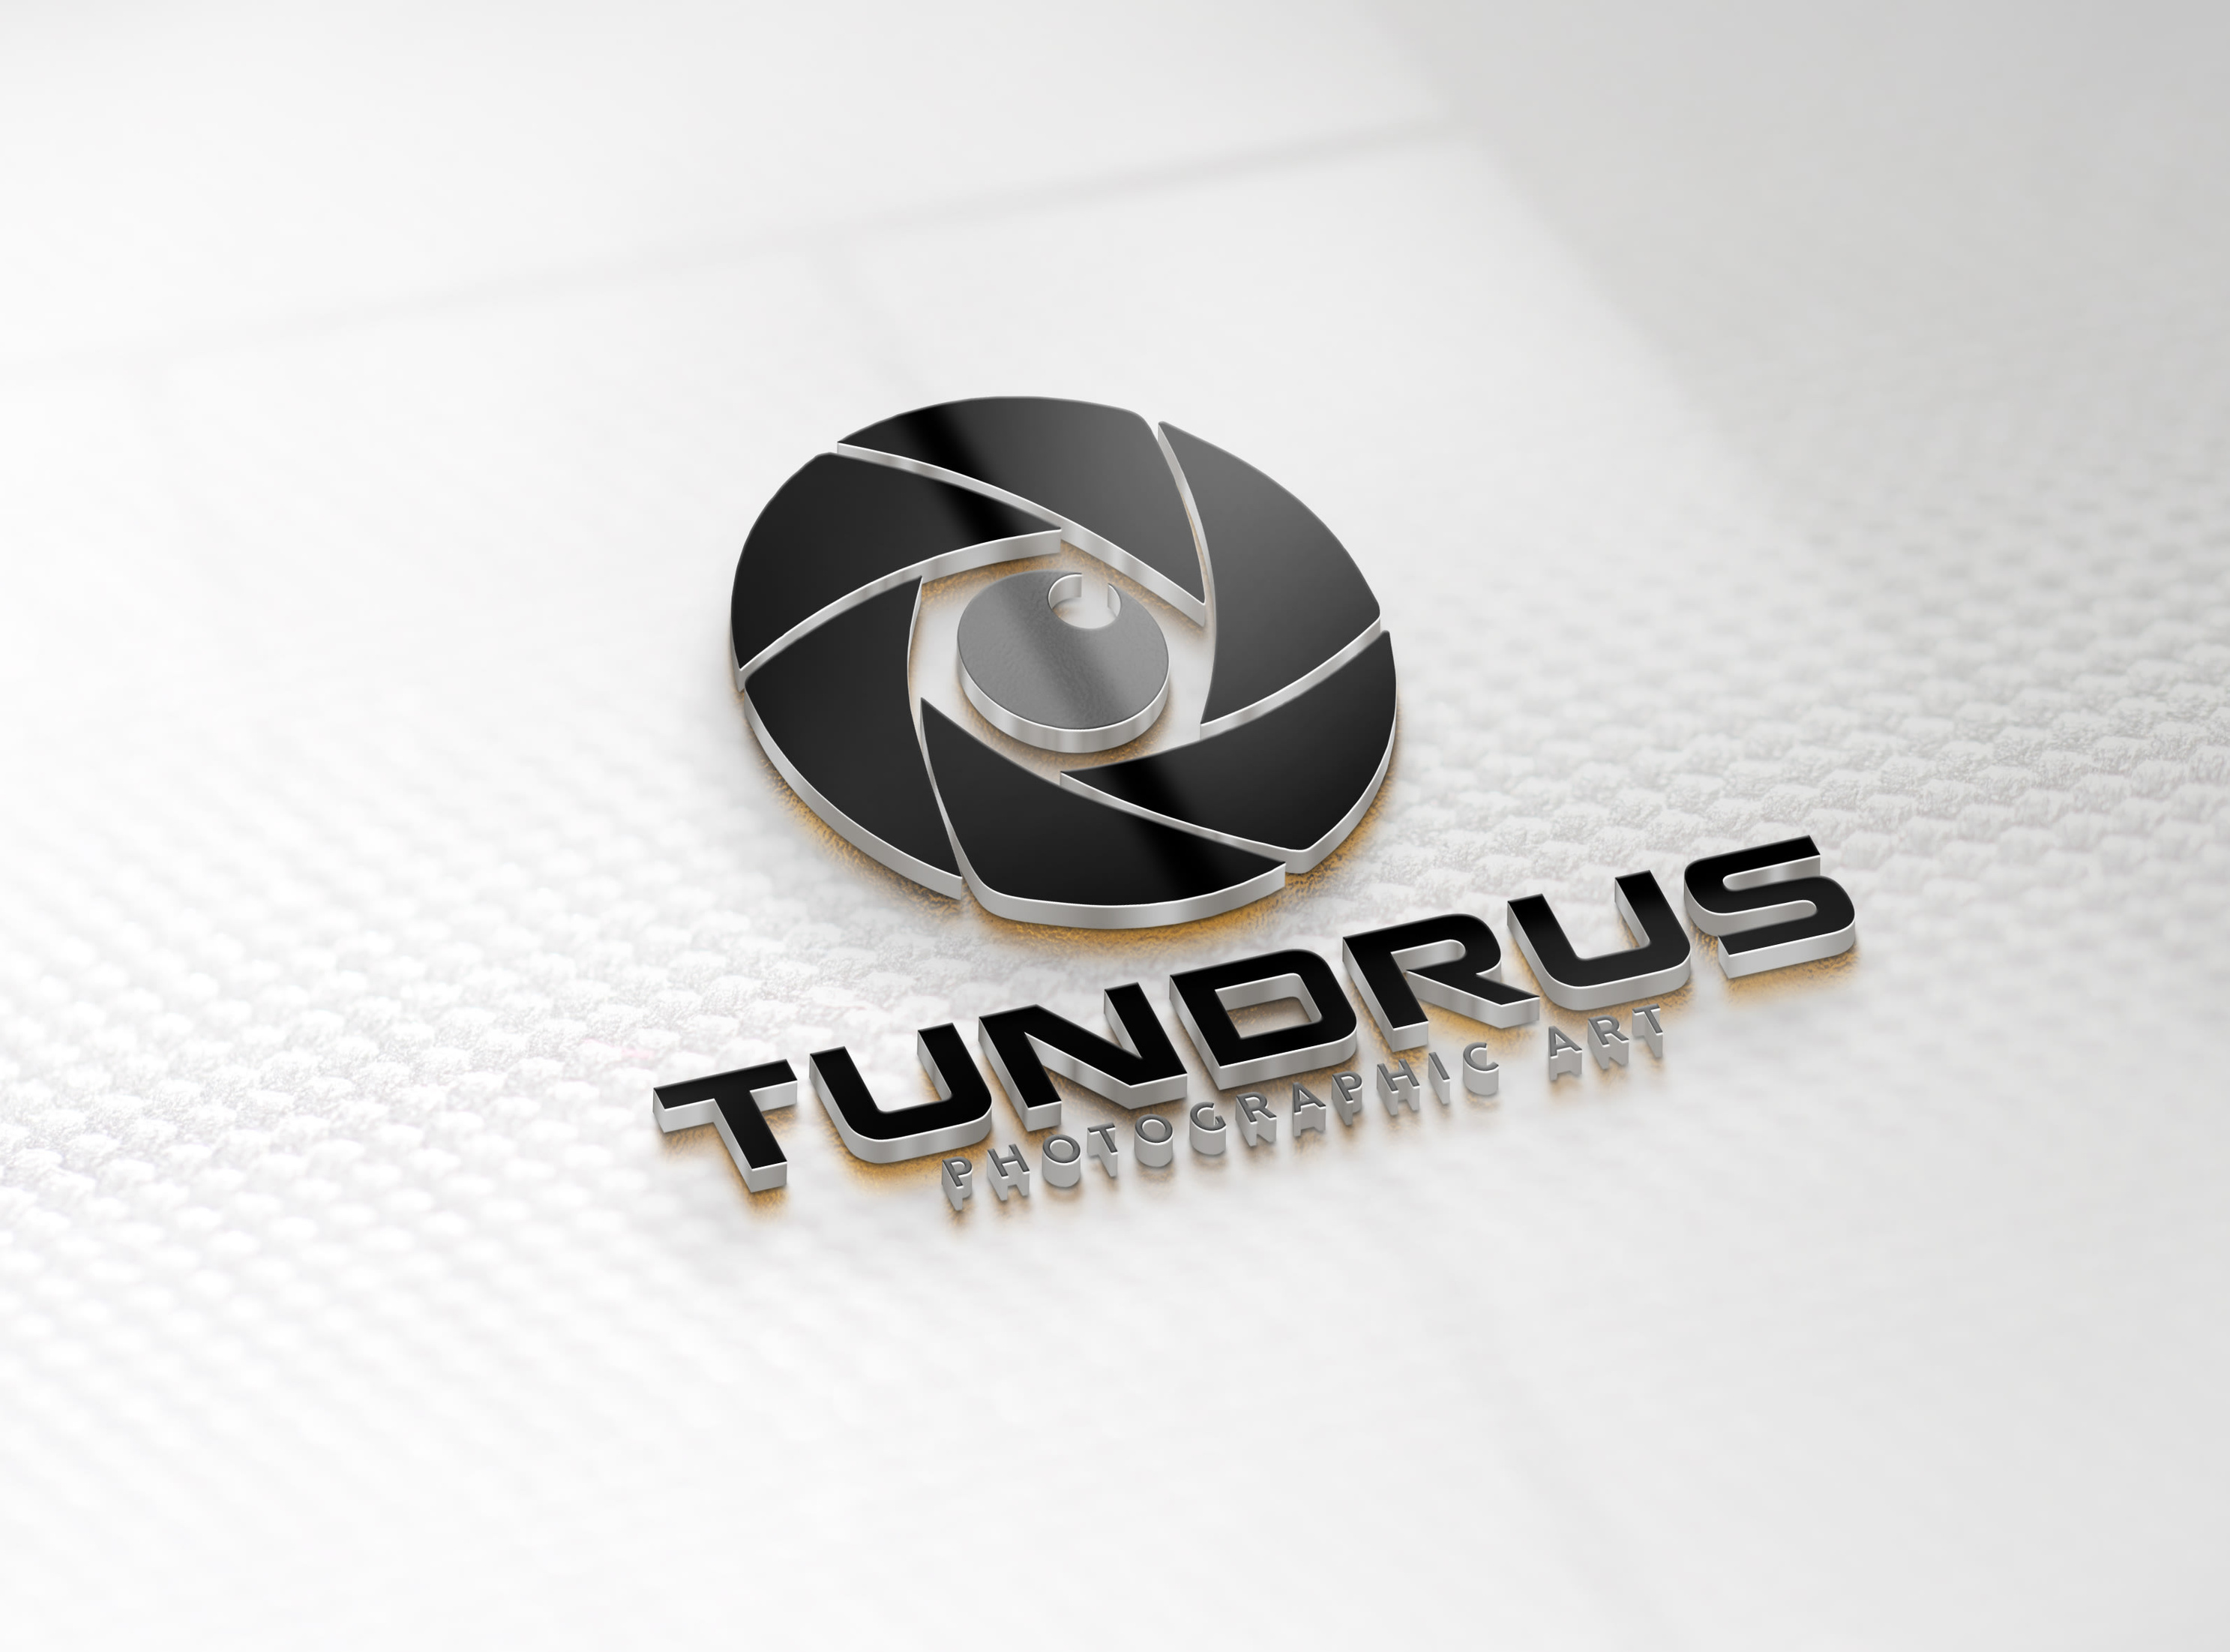 Tundrus Photographic's Portfolio